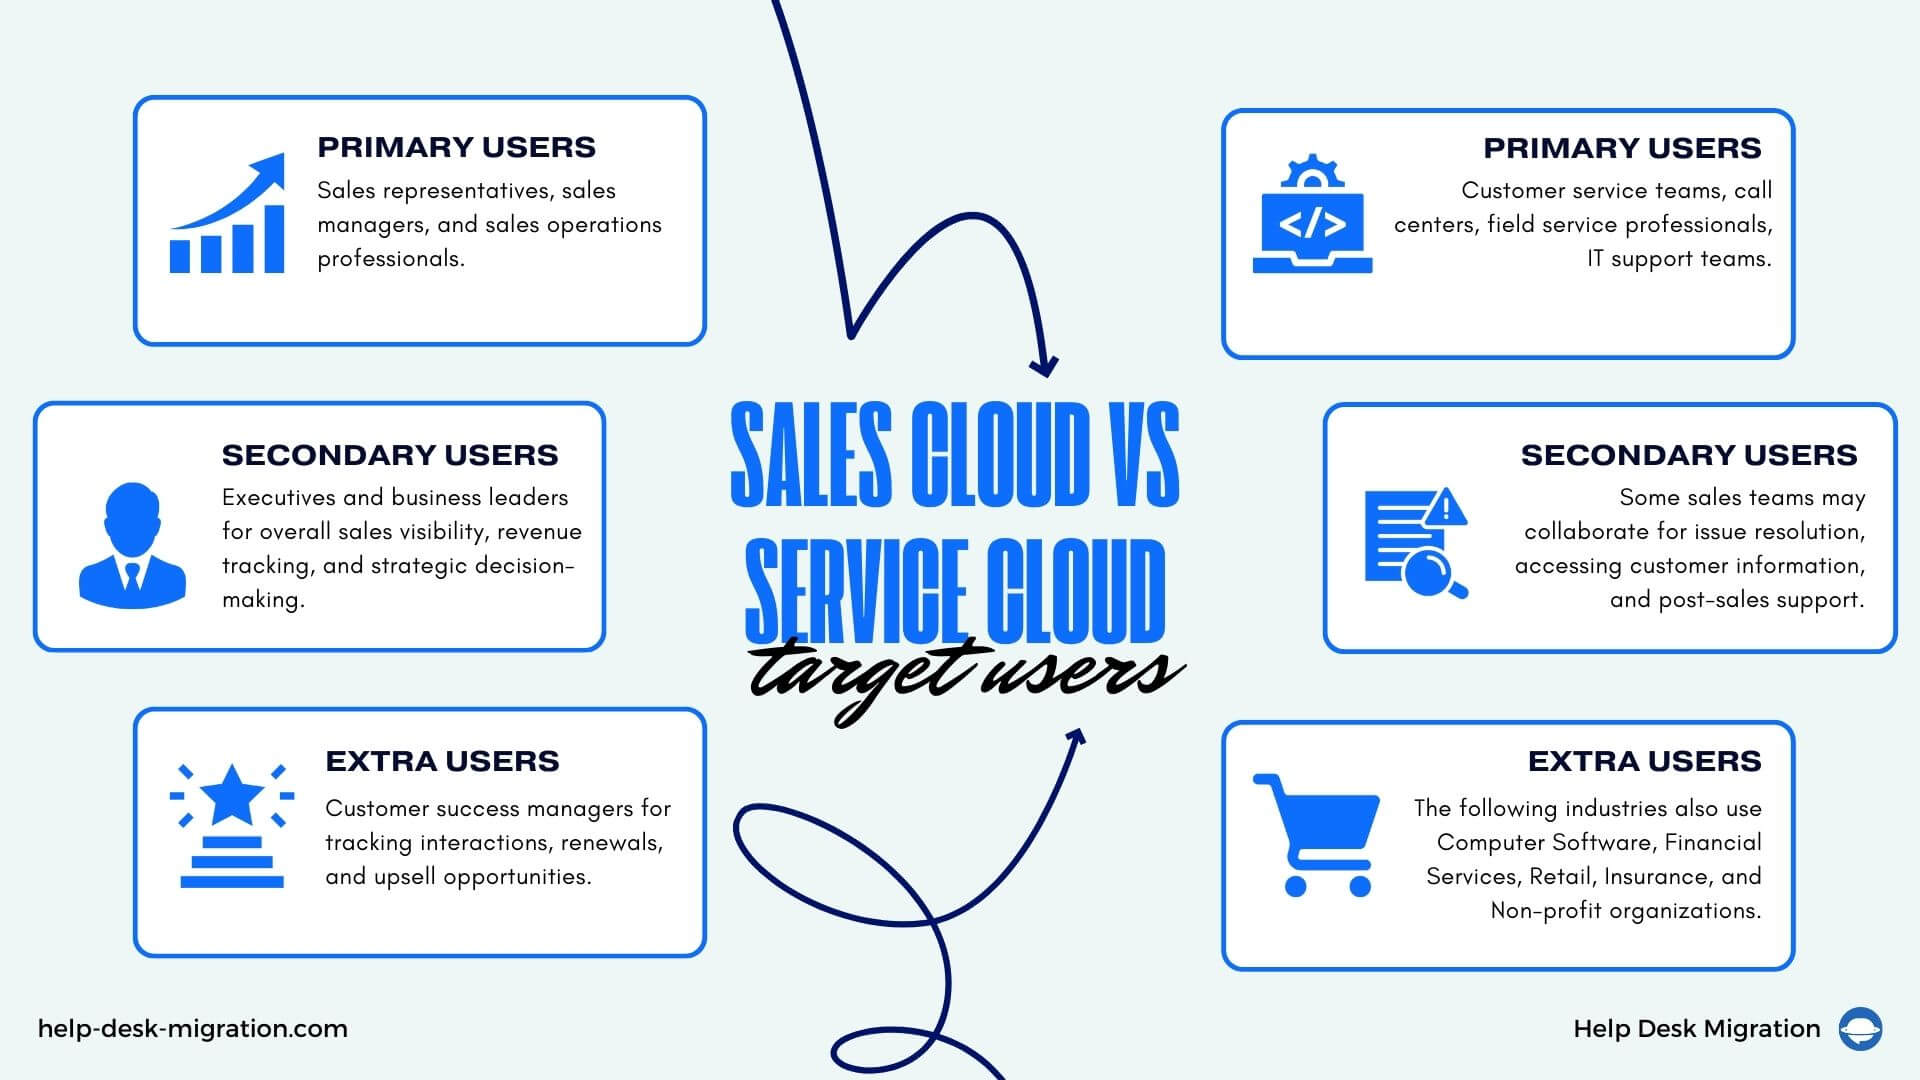 Usuários-alvo do Sales Cloud vs Service Cloud | Help Desk Migration Blog